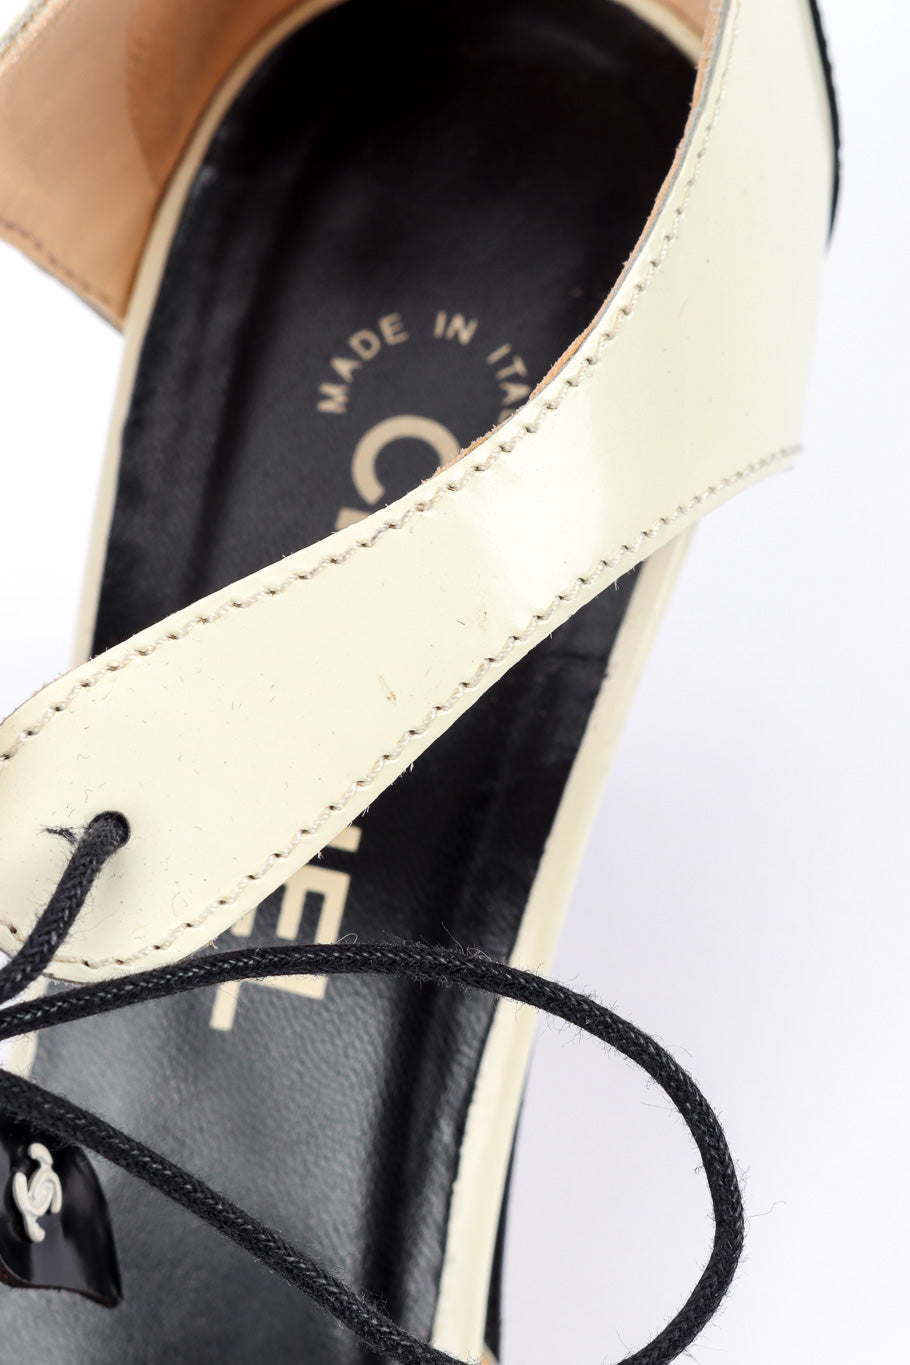 Vintage Chanel Lace Up Heels scuff mark closeup @recessla